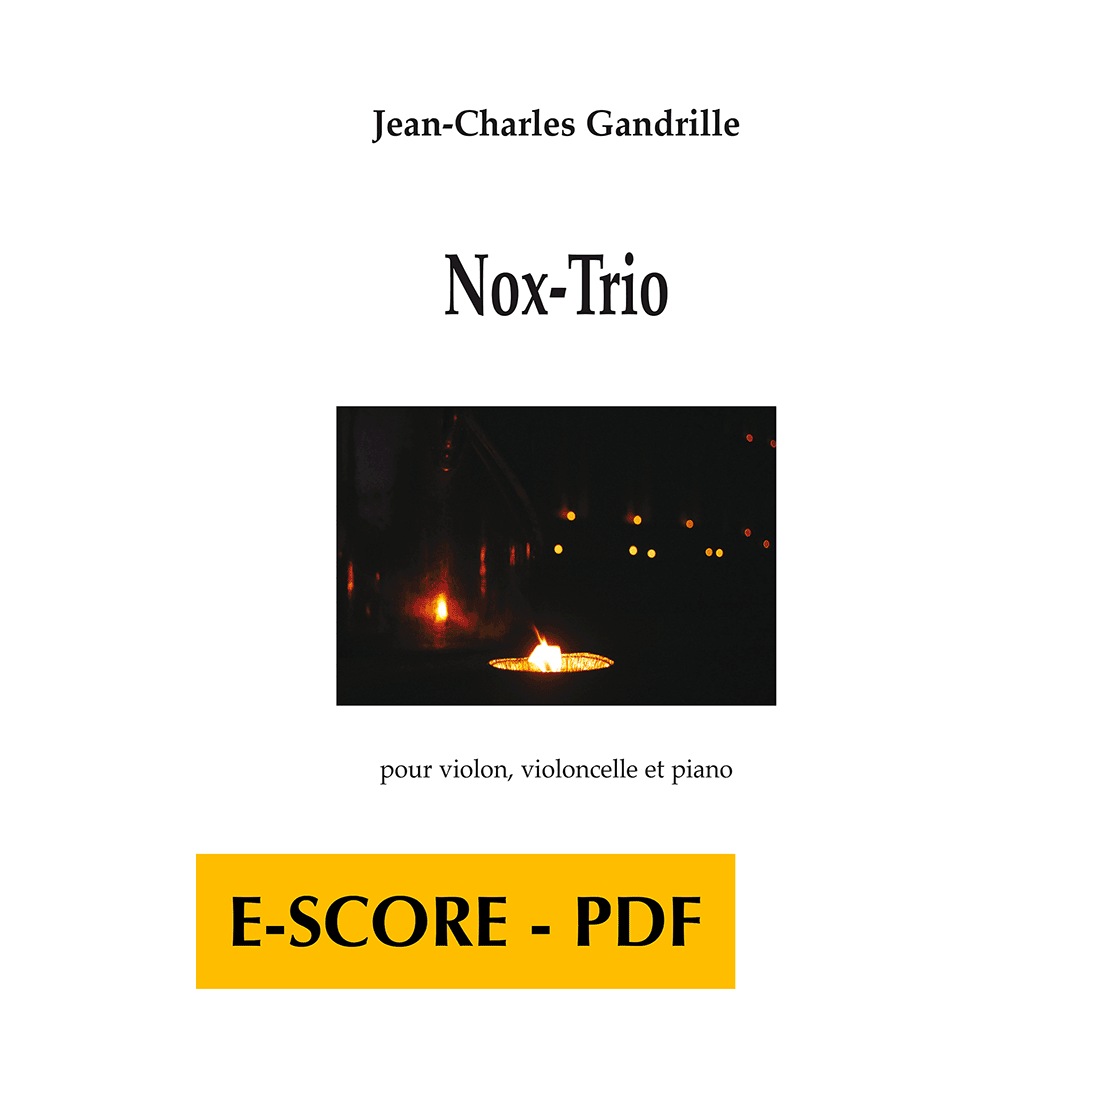 Nox-Trio für Violin, Violoncello und Klavier - E-score PDF